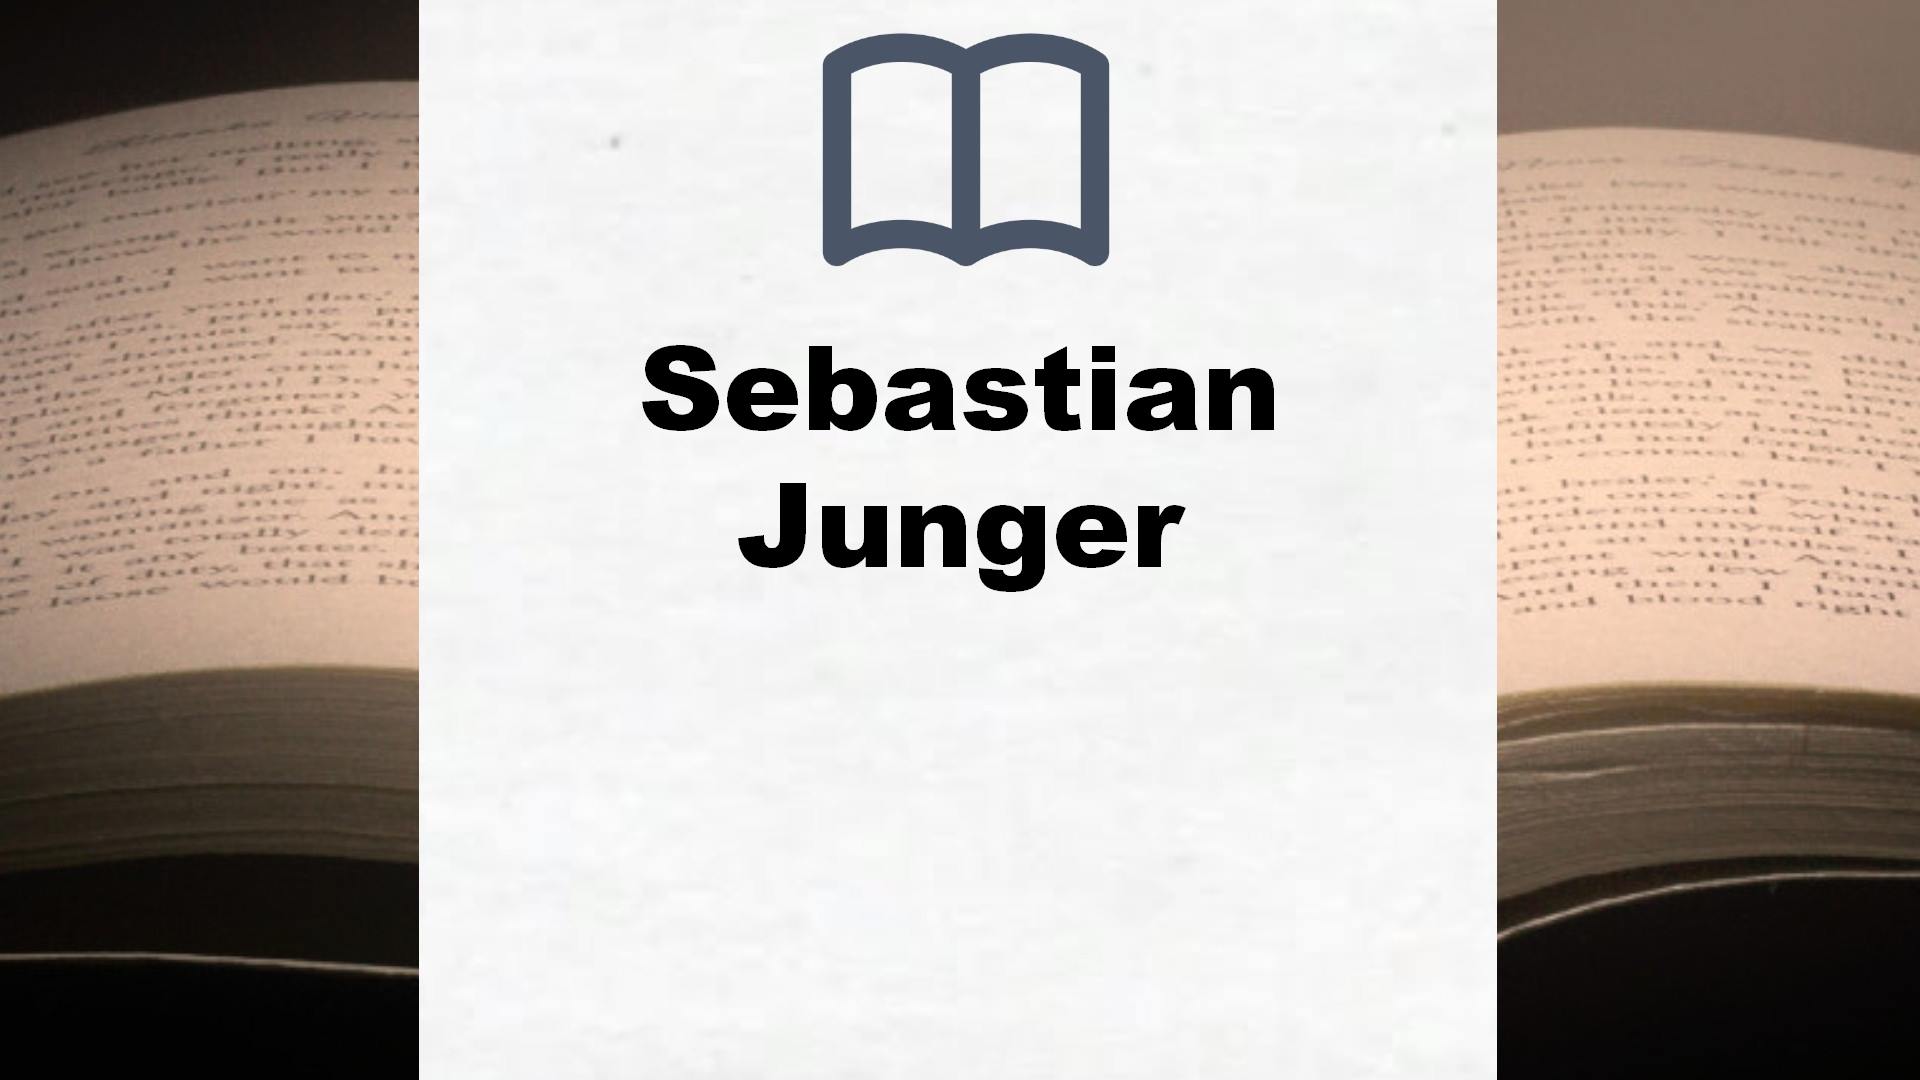 Libros Sebastian Junger